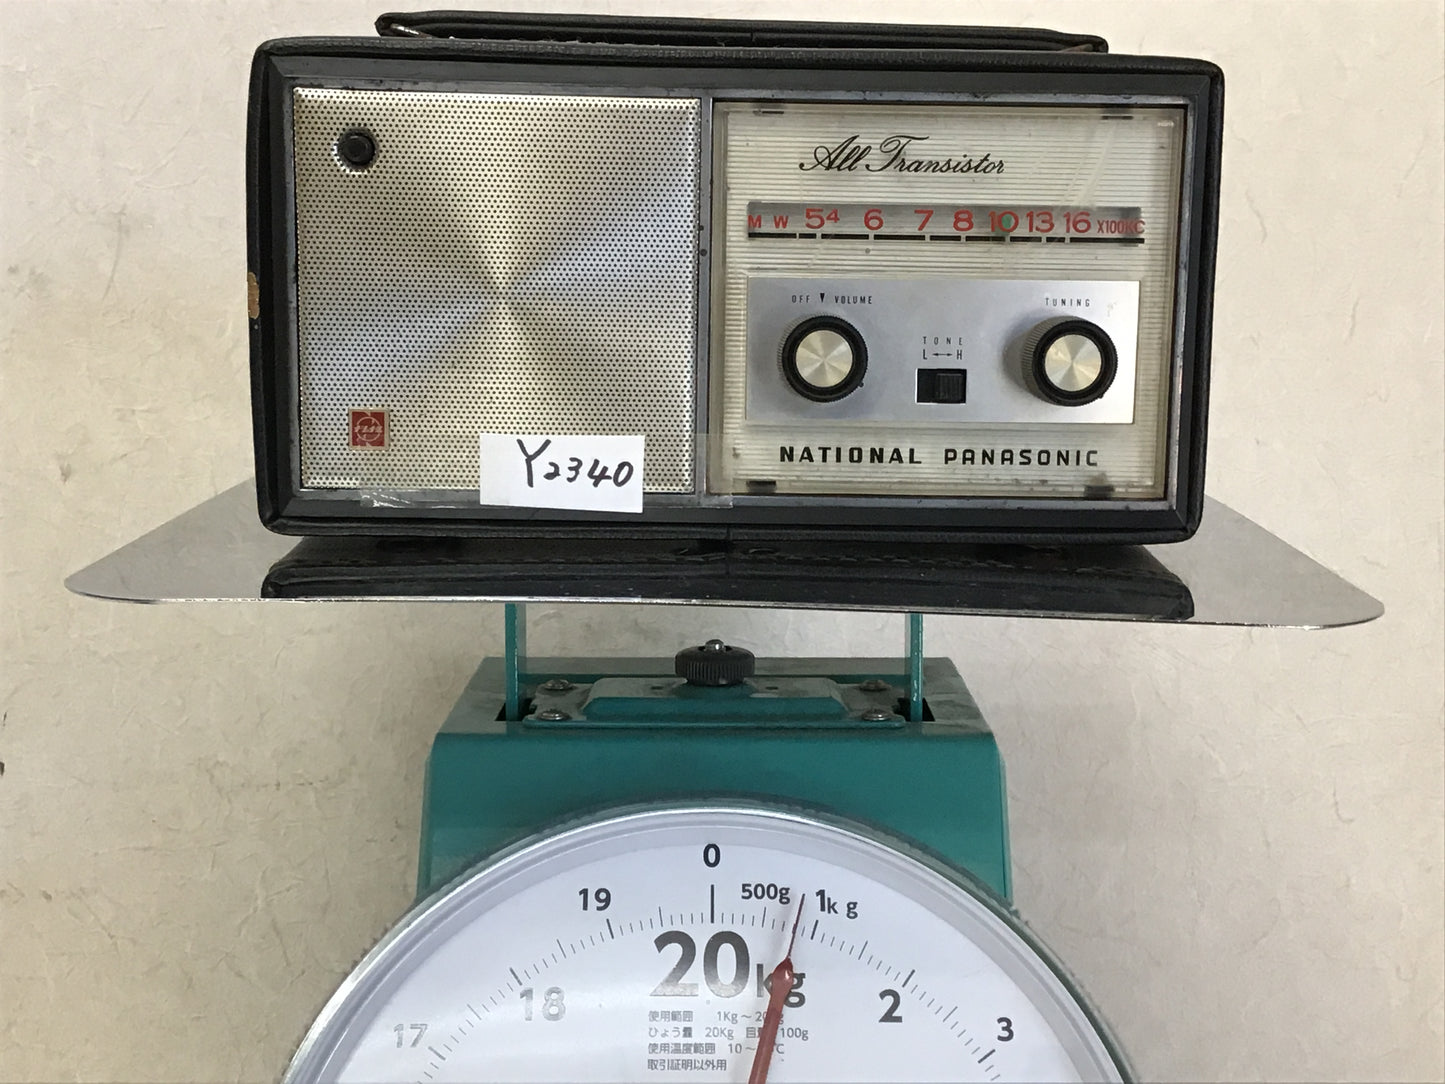 Y2340 RADIO NATIONAL PANASONIC R-145 transistor portable Japan vintage news